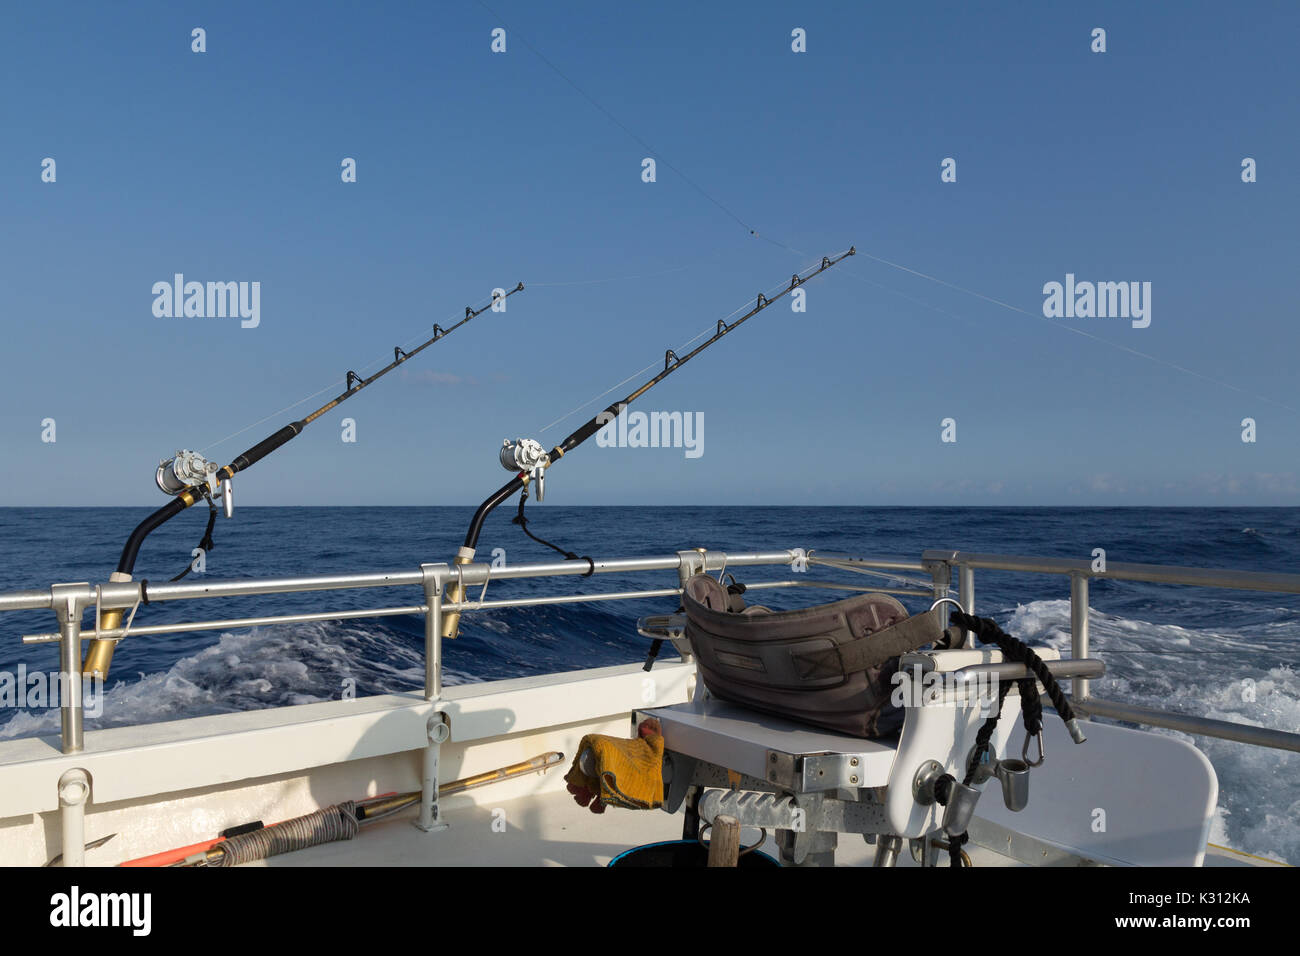 https://c8.alamy.com/comp/K312KA/fighting-chair-with-fishing-gear-on-offshore-deep-sea-fishing-boat-K312KA.jpg